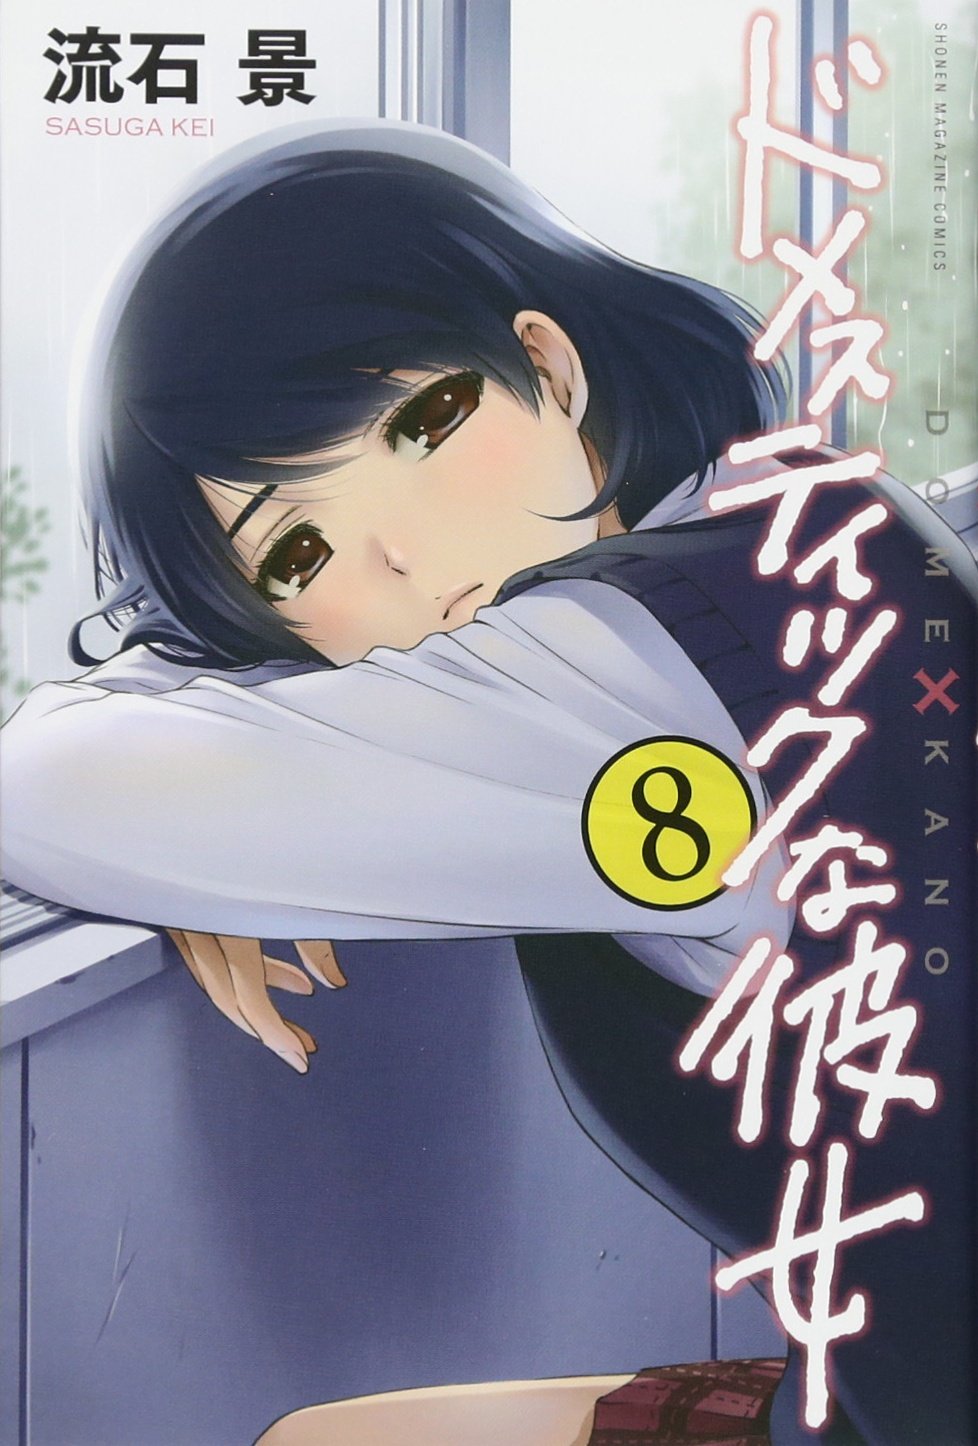 Domestic Girlfriend Volume 12 (Domestic na Kanojo) - Manga Store